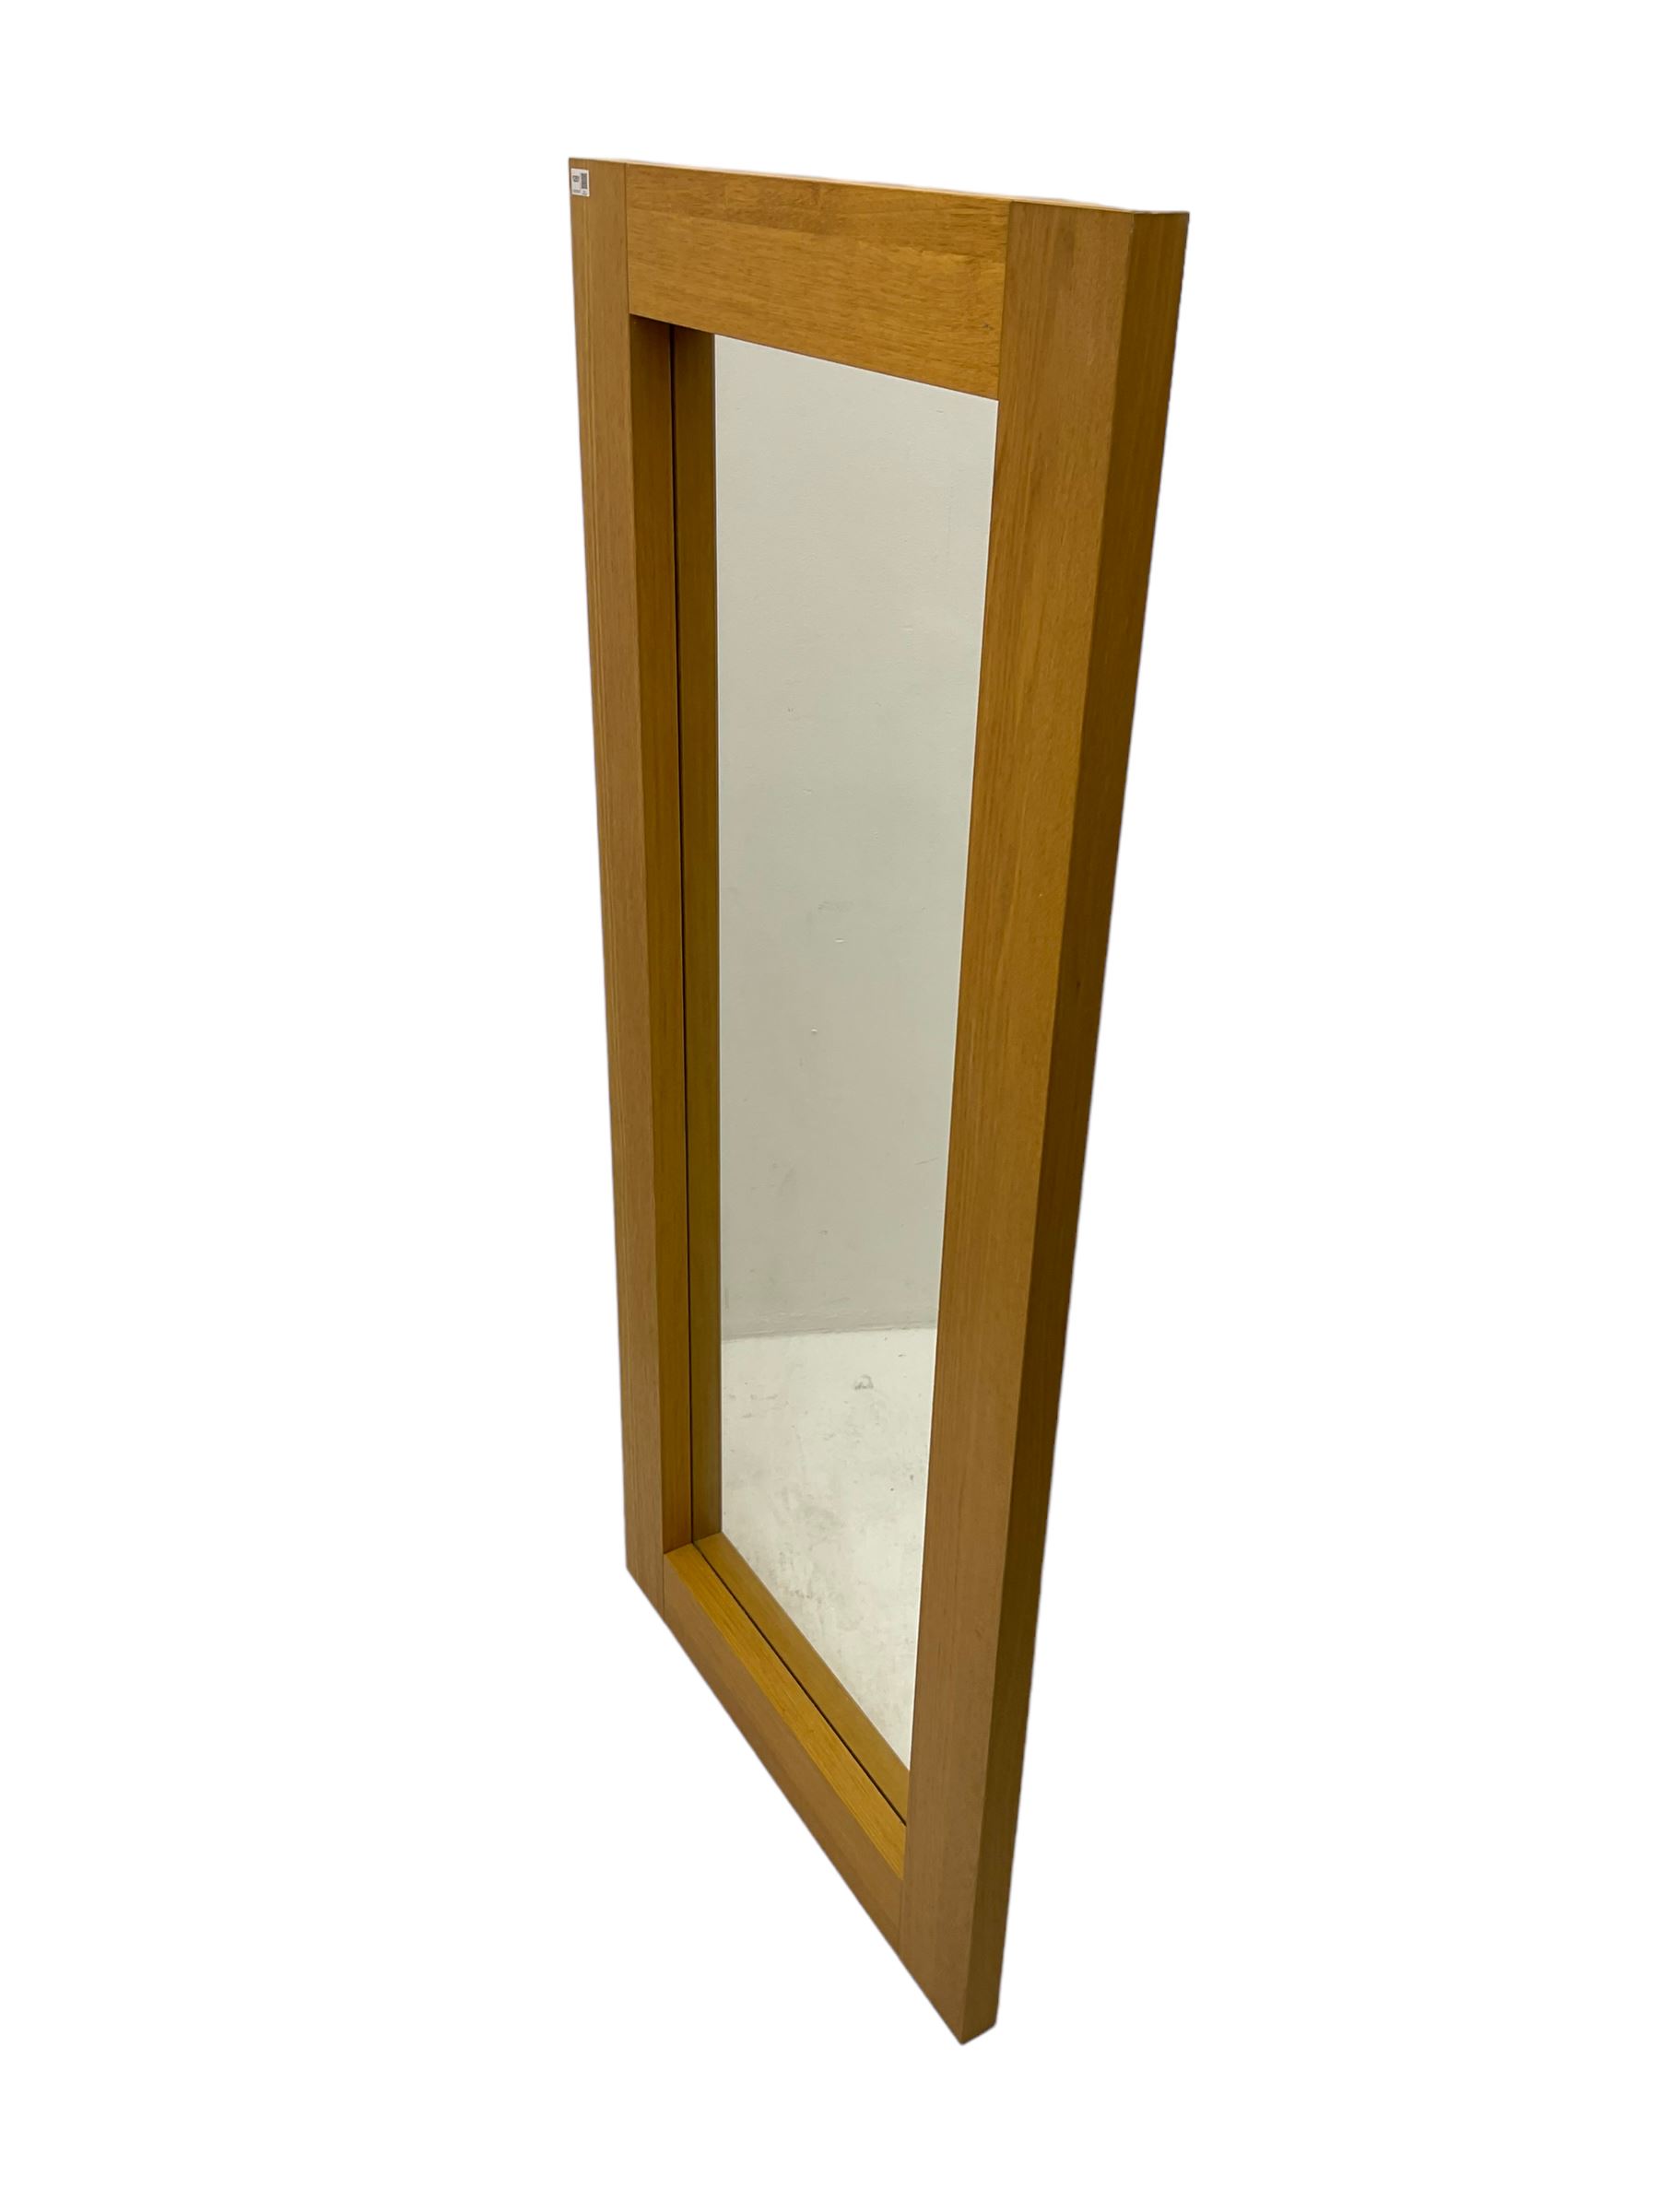 Contemporary oak framed mirror - Image 7 of 10